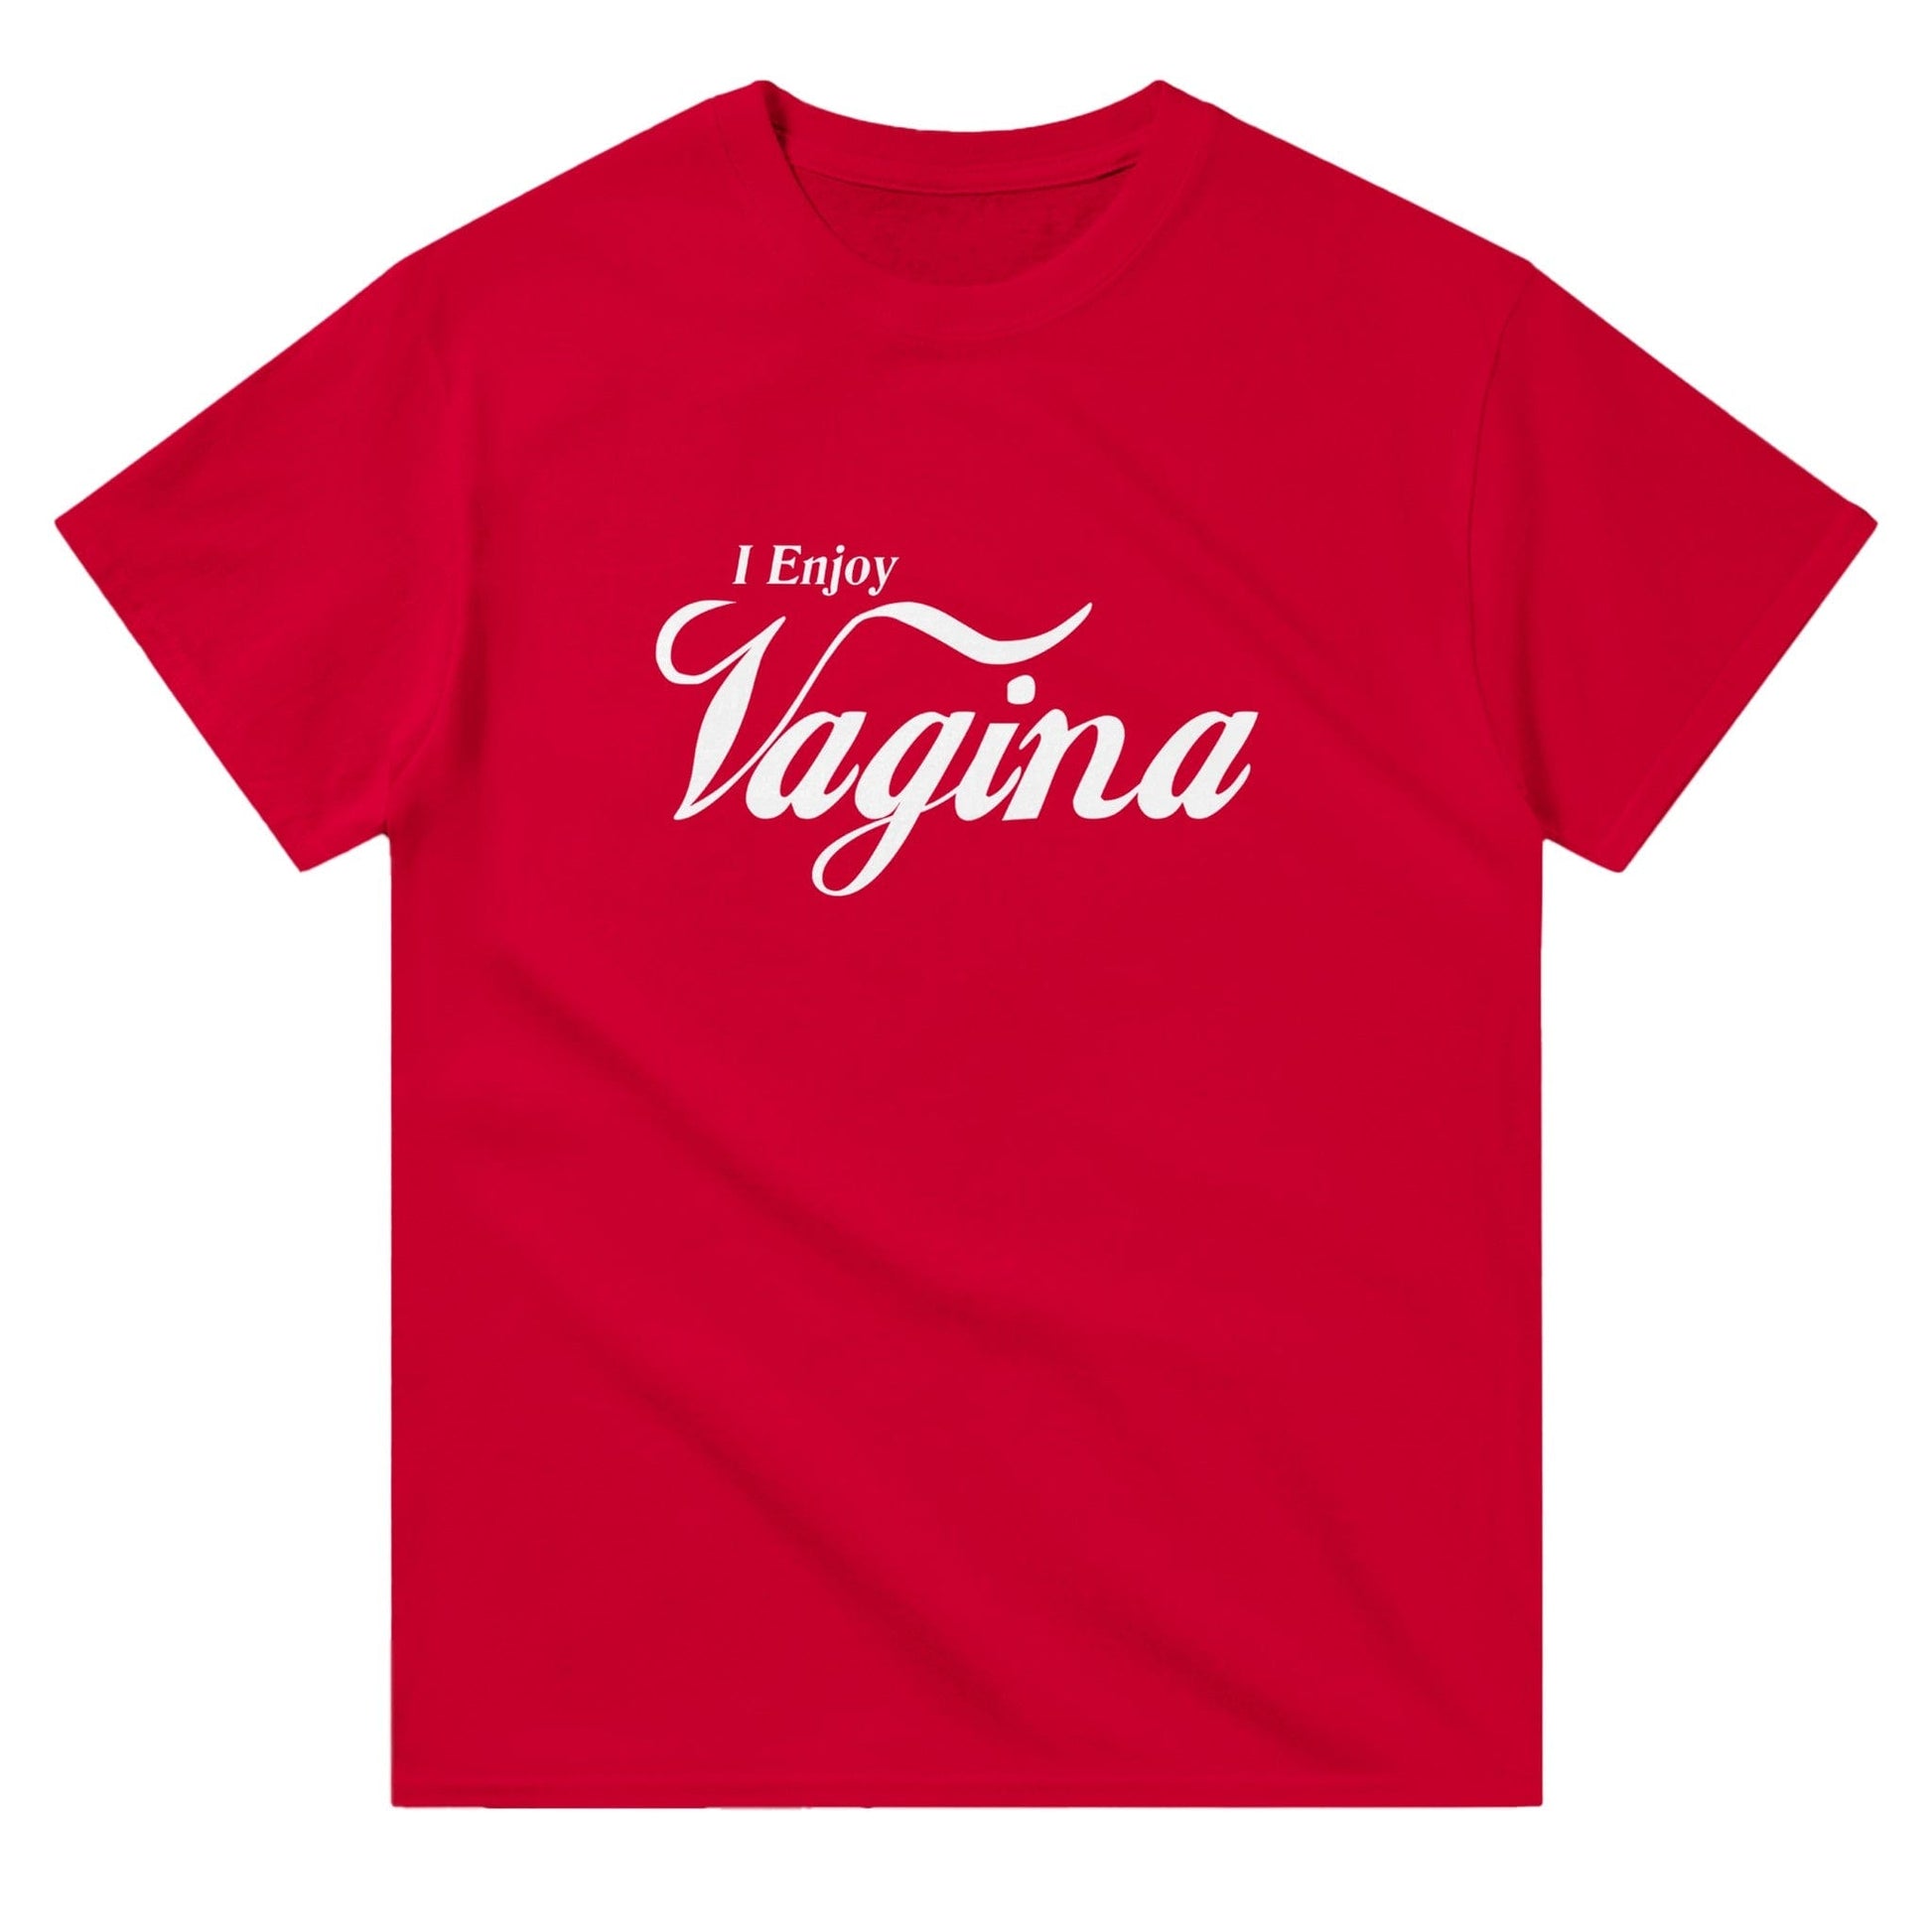 I Enjoy Vagina Coke T-Shirt Graphic Tee Red / Mens / S BC Australia